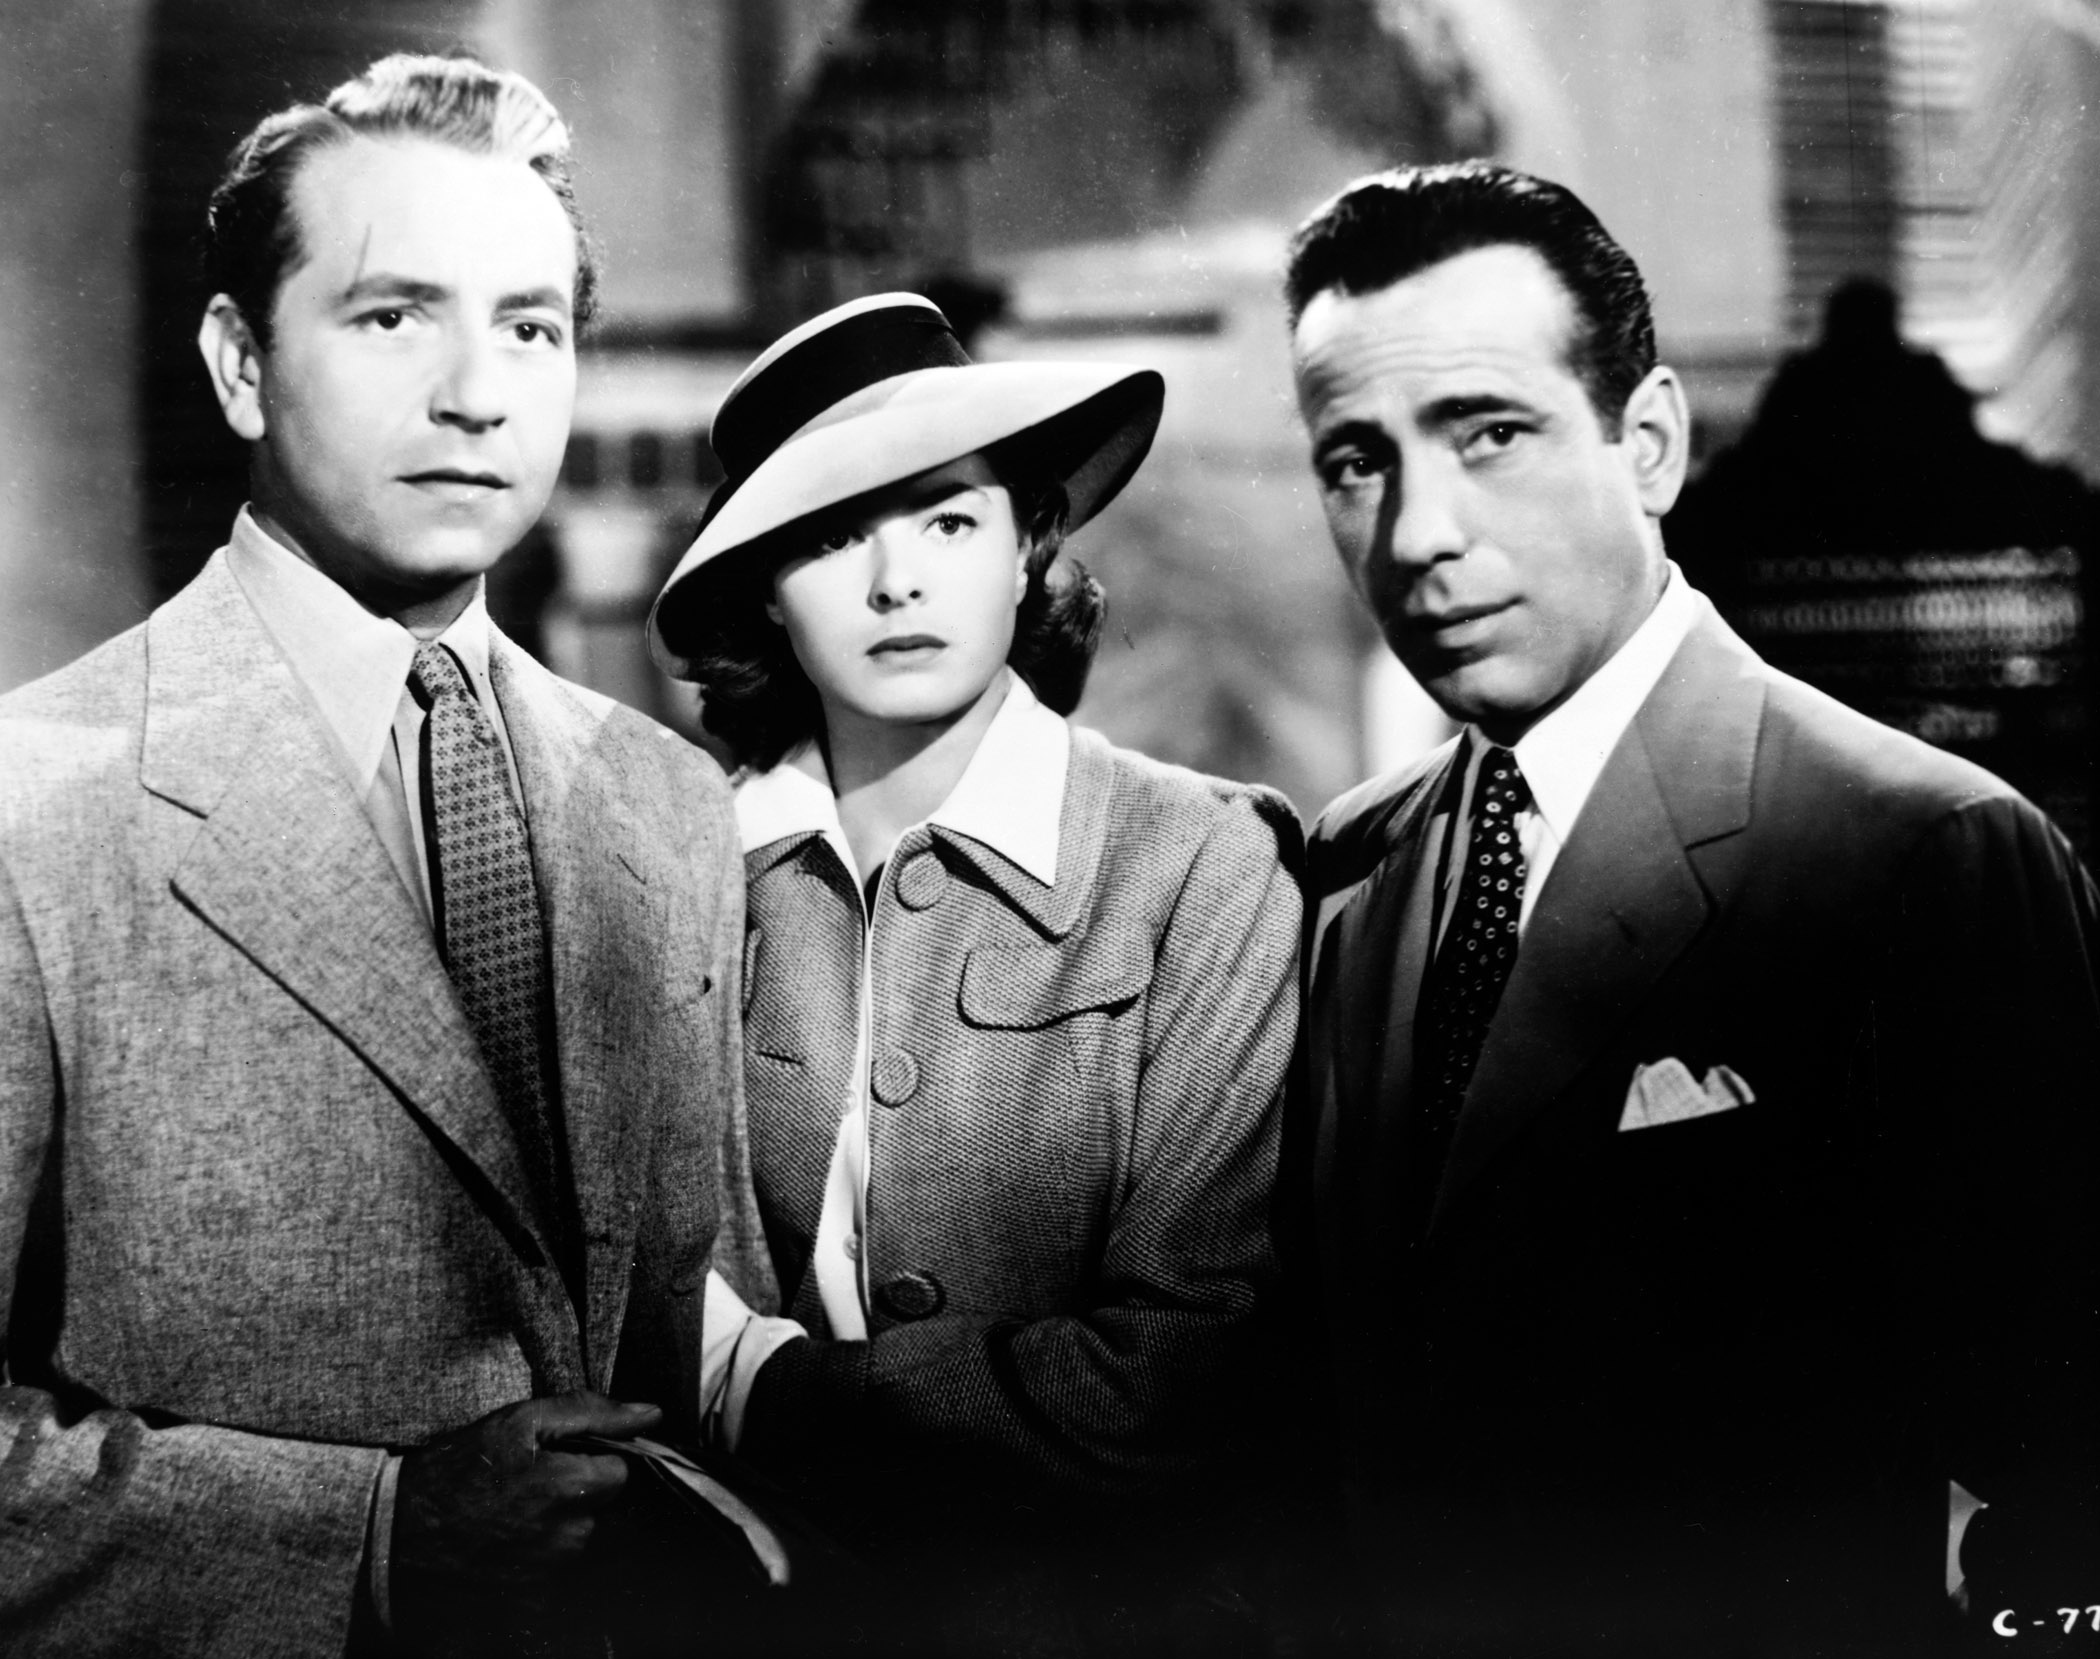 Medium shot of Paul Henreid as Victor Laszlo, Ingrid Bergman as Ilsa Lund, wearing hat, and Humphrey Bogart as Rick Blaine.